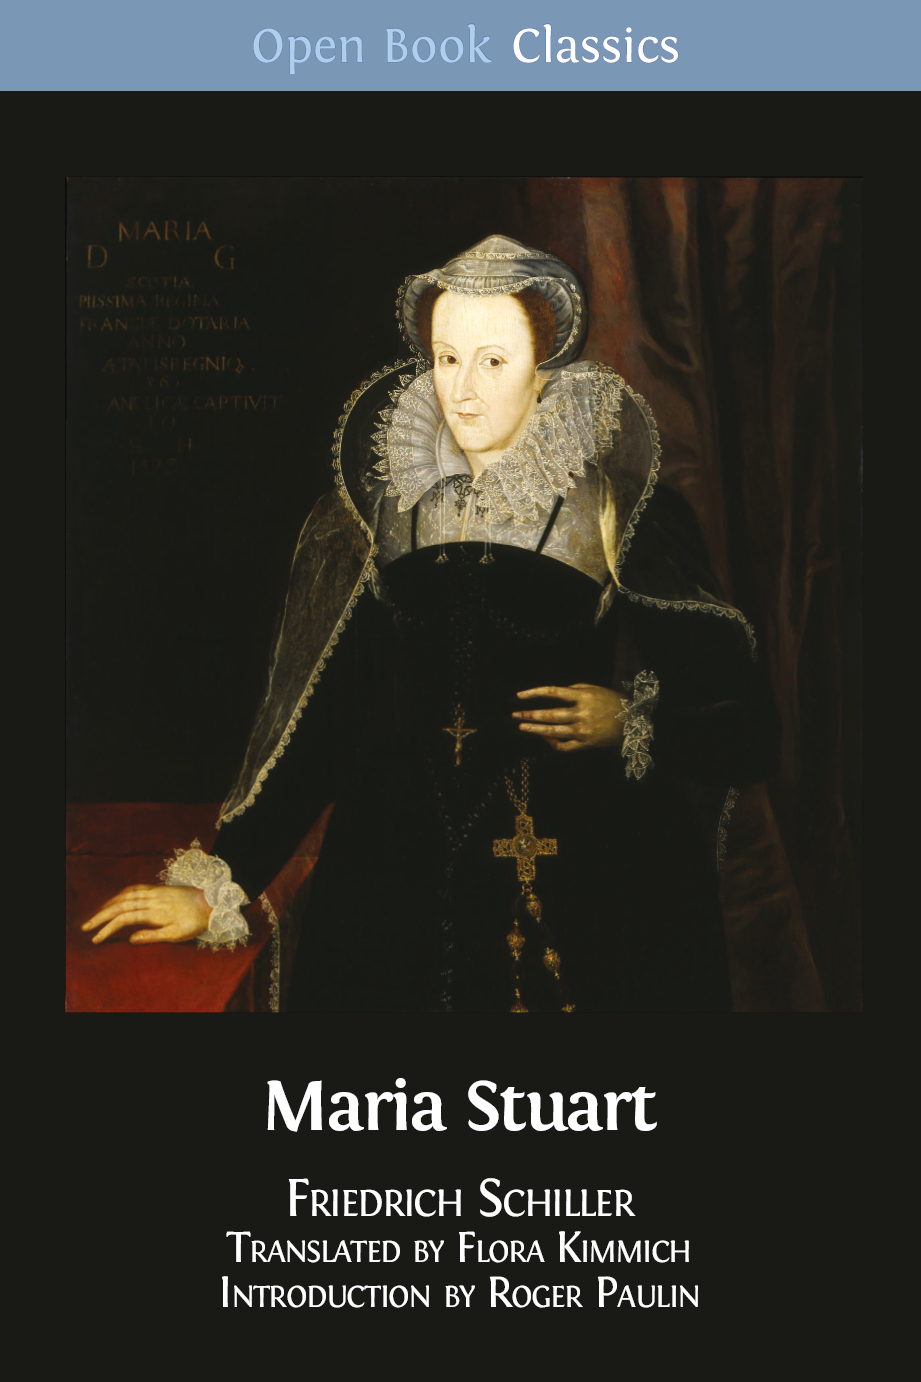 Maria Stuart book cover image